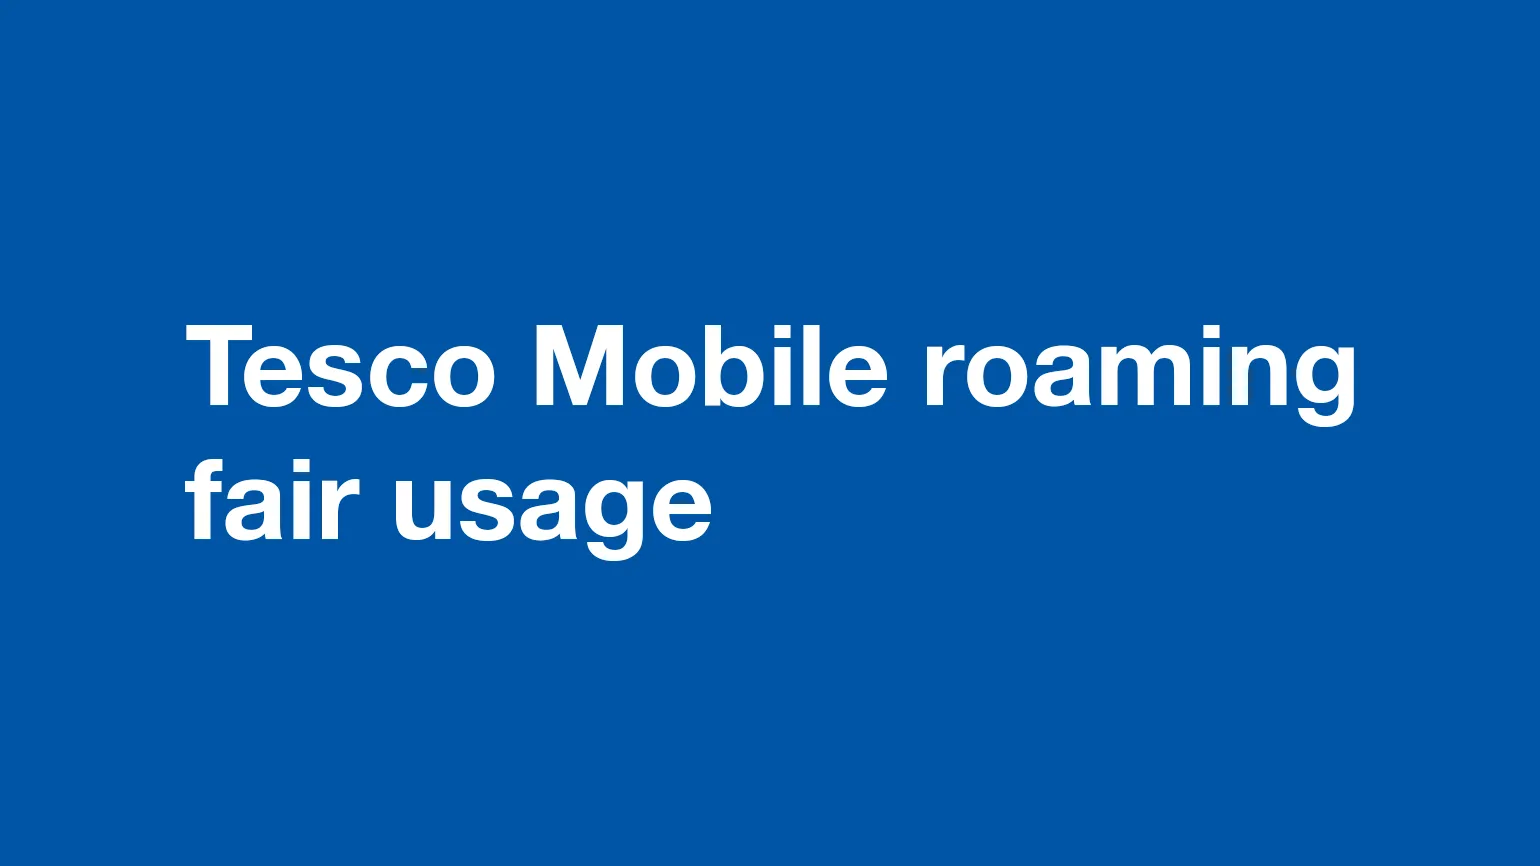 Tesco Mobile roaming fair usage policy